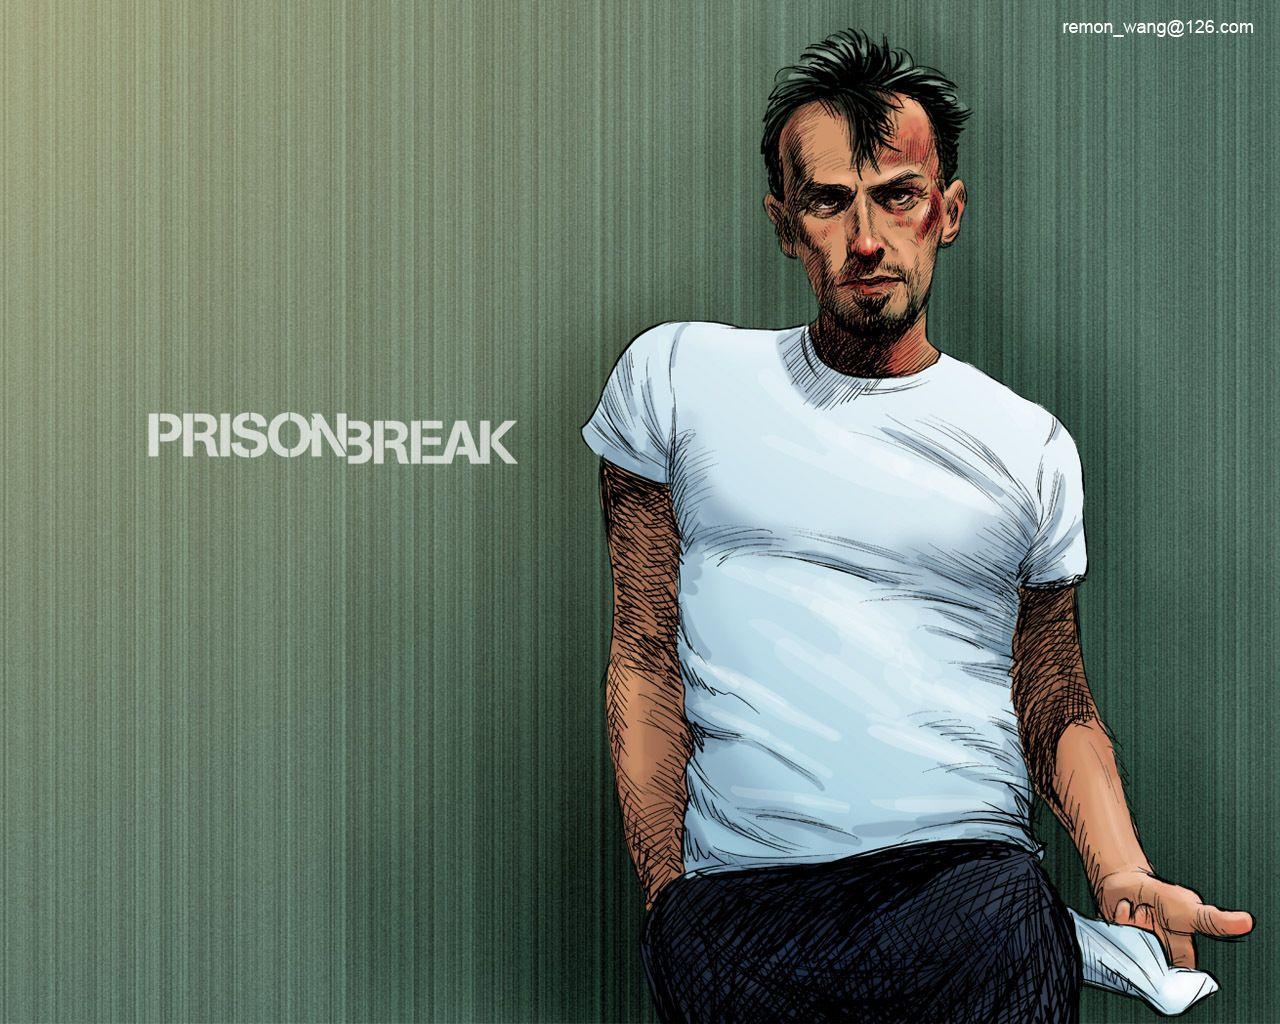 Prison Break Guys image PB HD wallpaper and background photo